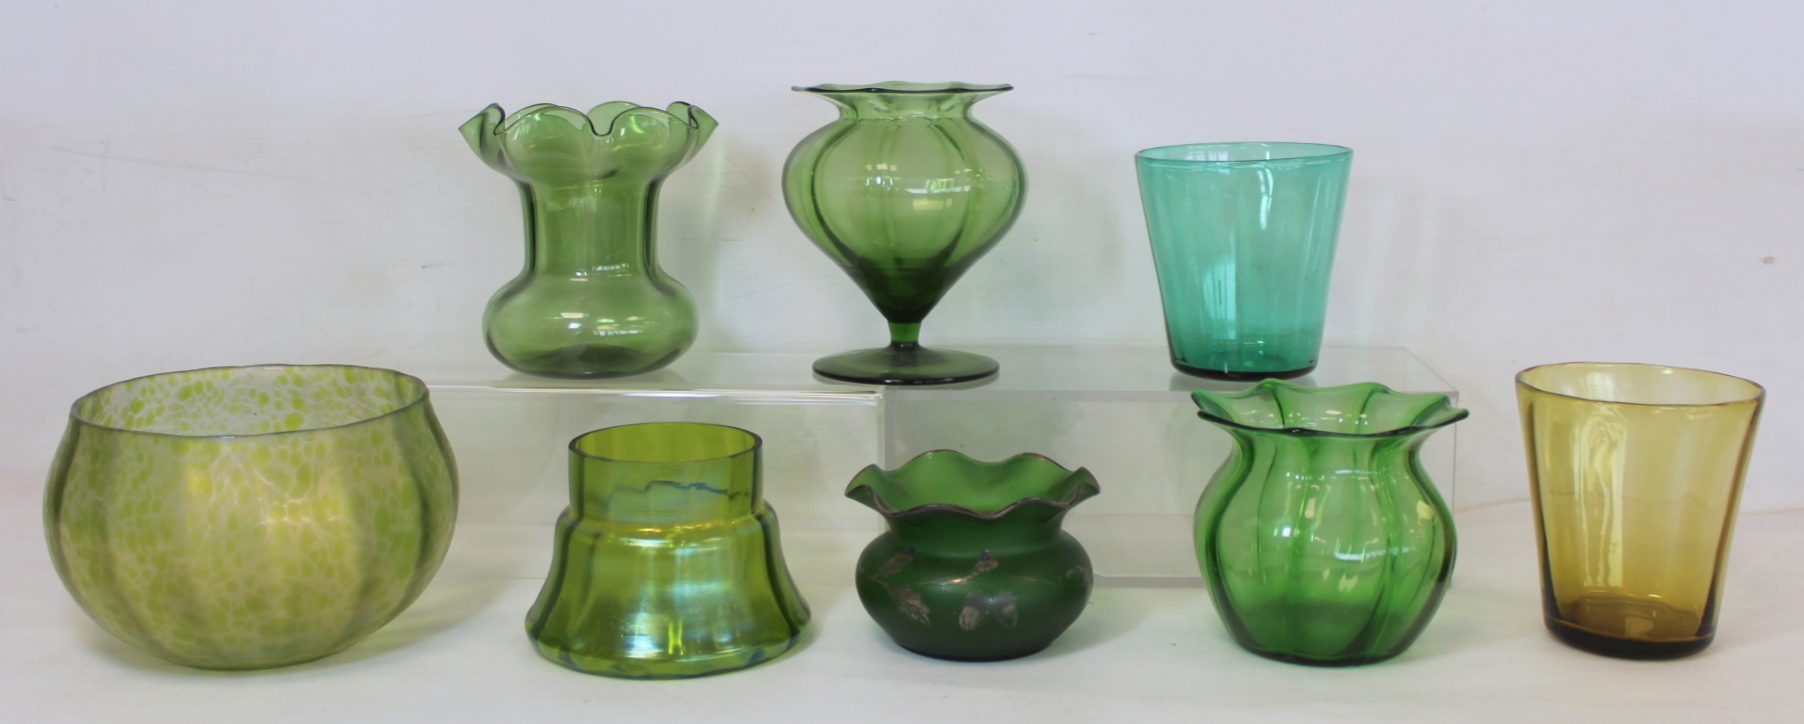 Early 20th century art glass mottled green lustre bowl with internal vertical ribbing, 11cm high;